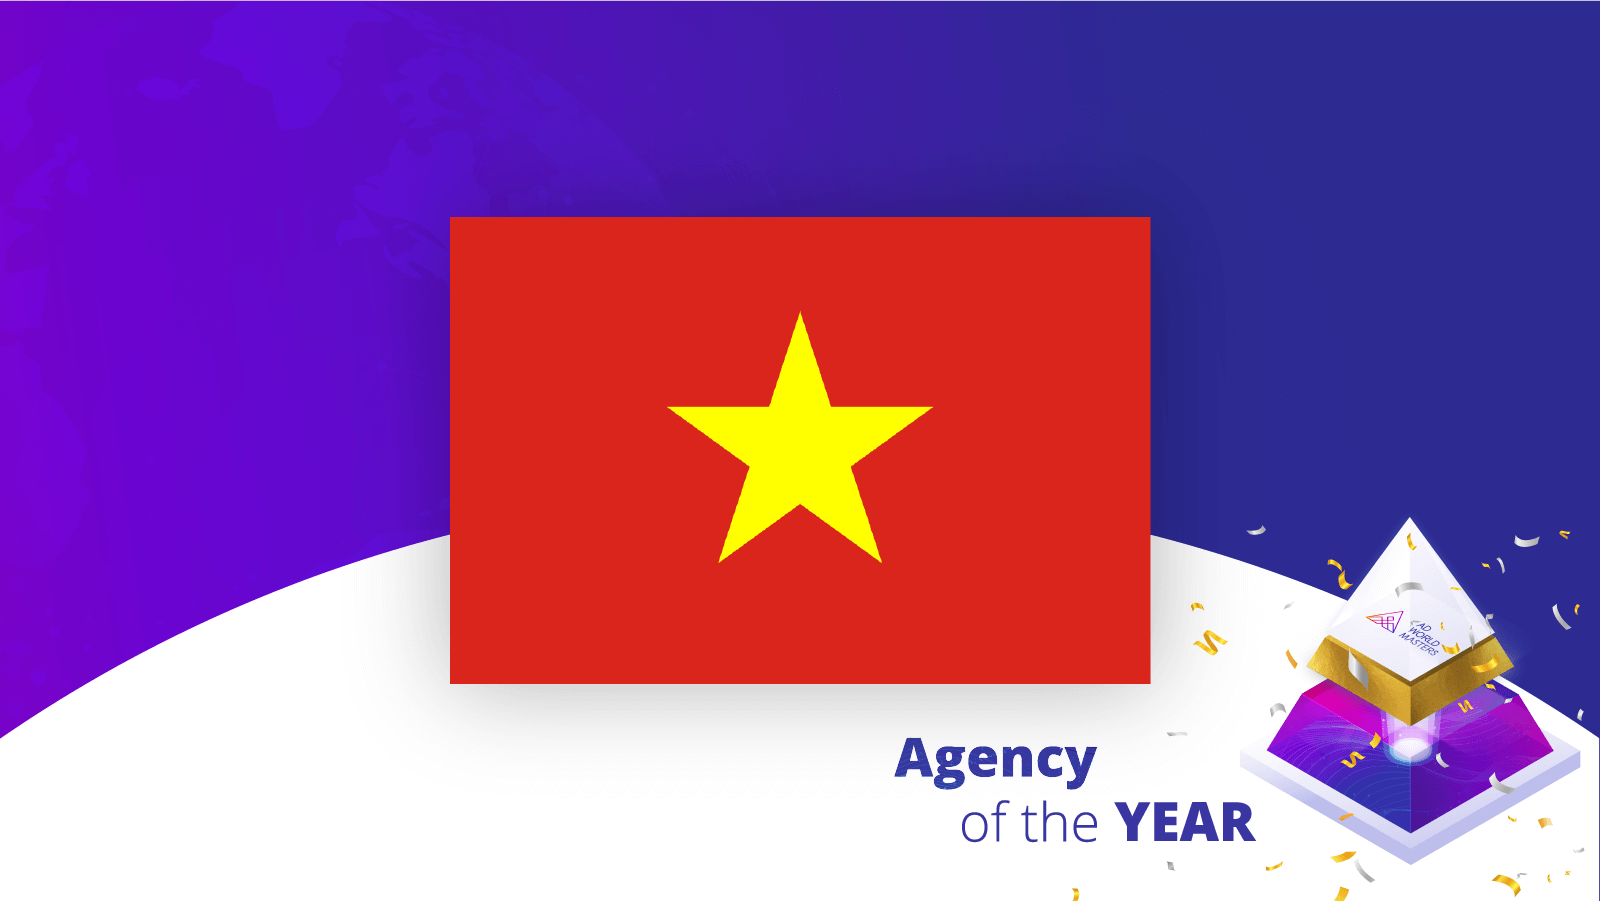 Agencies of the Year Vietnam